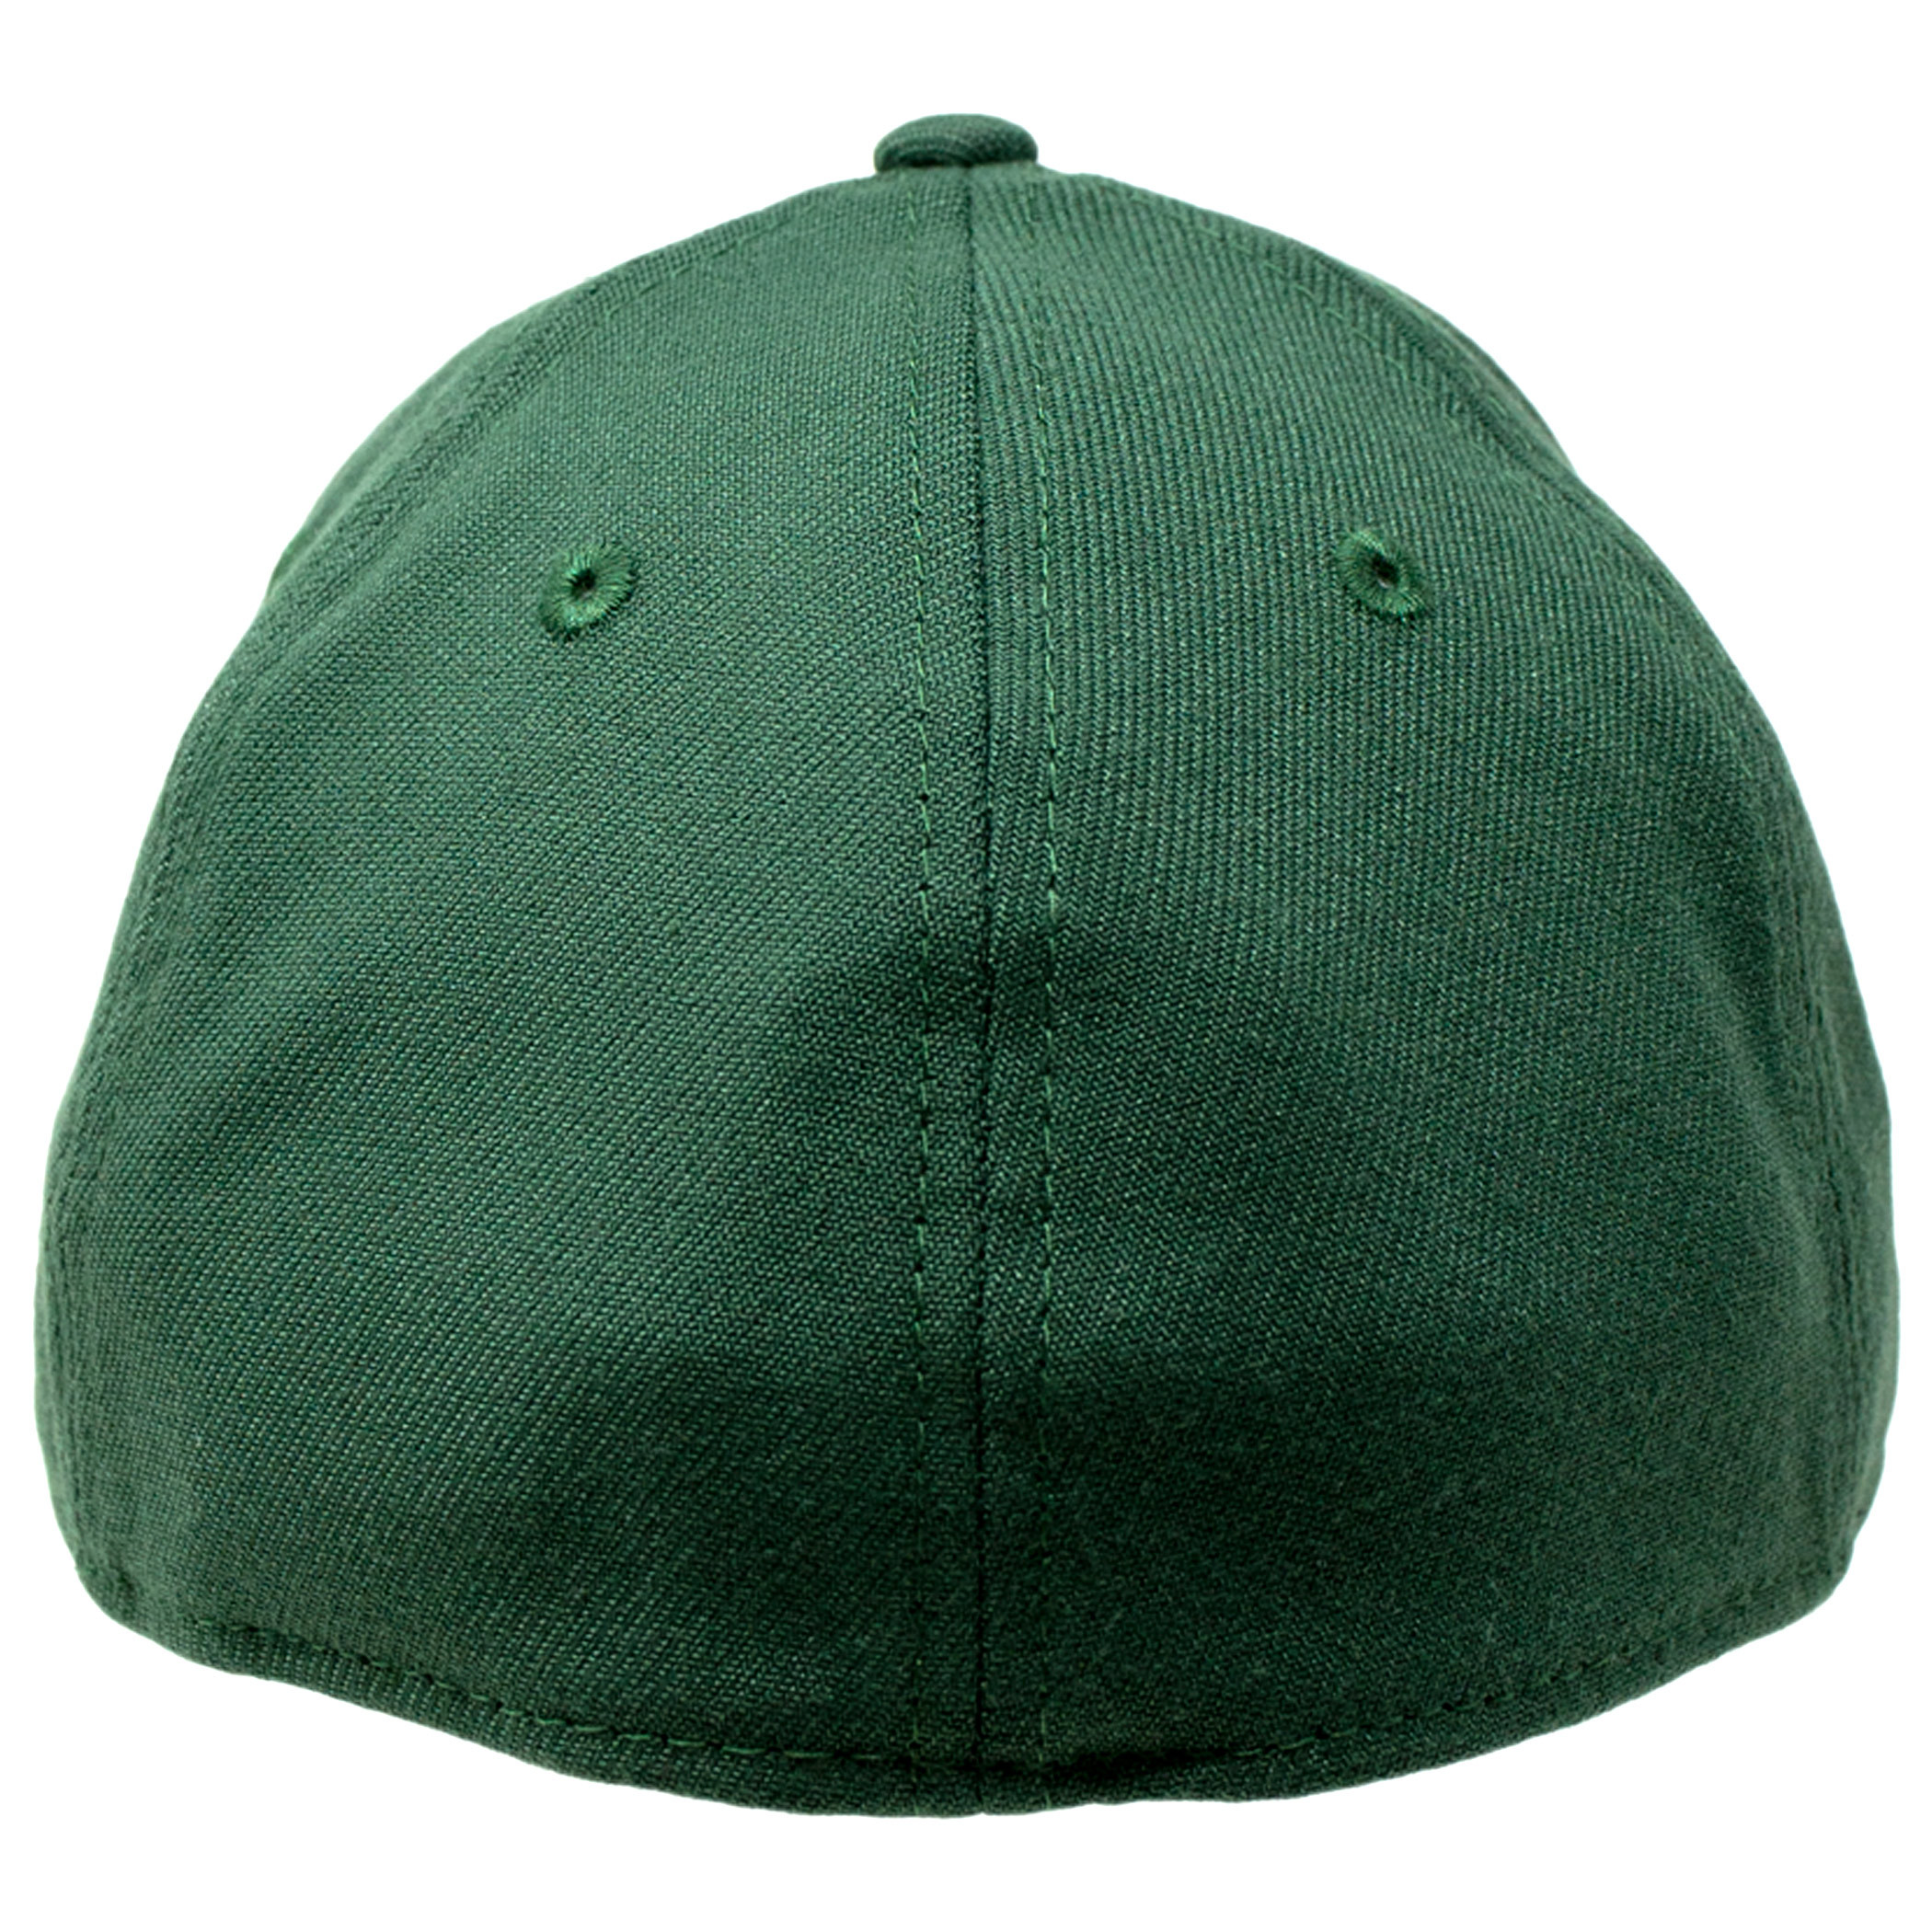 Star Wars The Mandalorian The Child Green 39Thirty New Era Hat